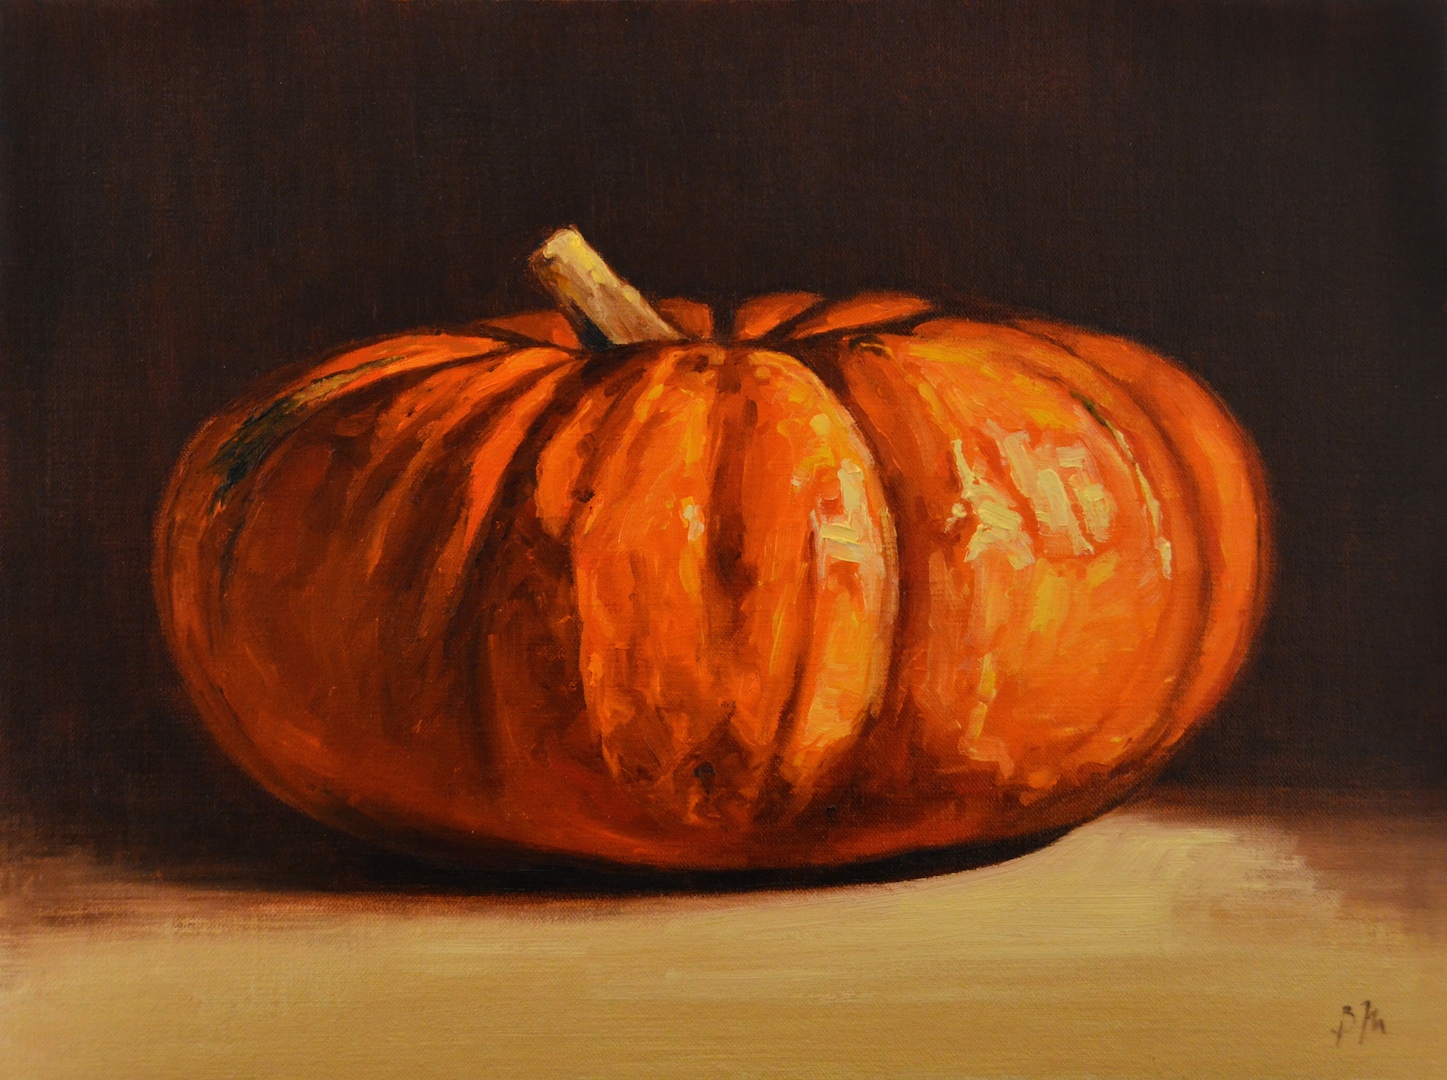 "Pumpkin" by Begoña Morton